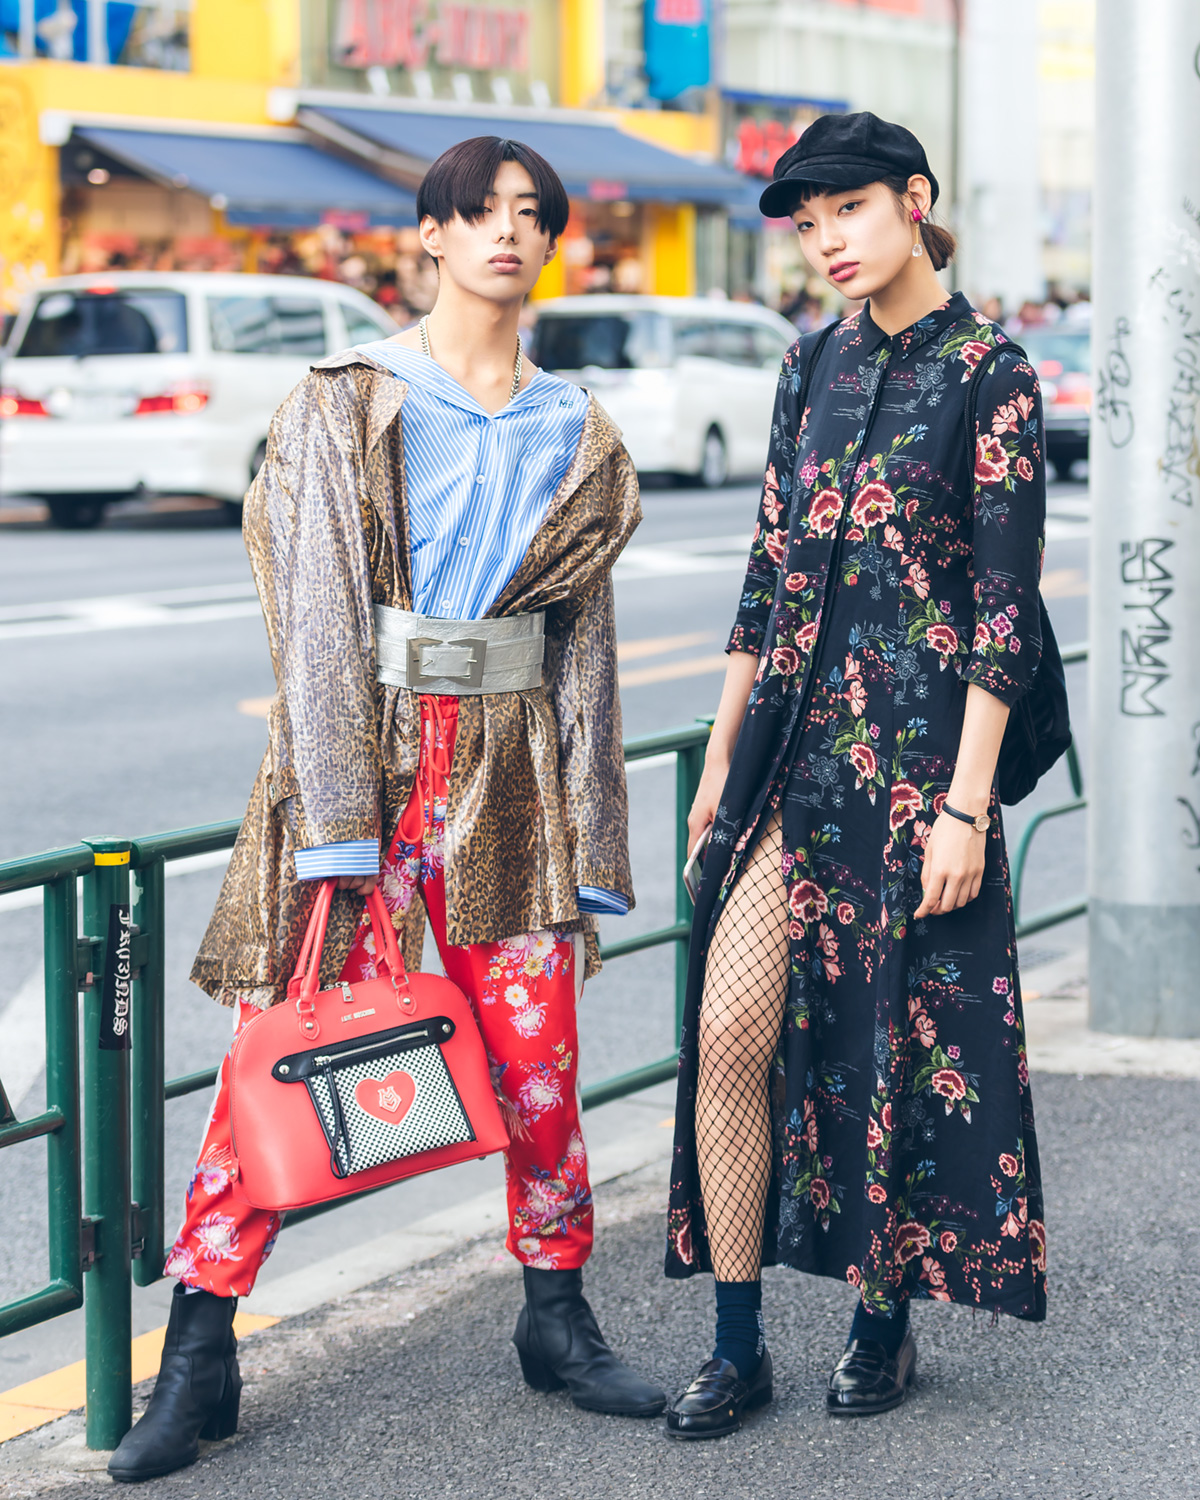 Mixed Prints Japanese Street Styles w/ Kinji Harajuku, Faith Tokyo, RRR By Sugar Spot Factory & Yosuke